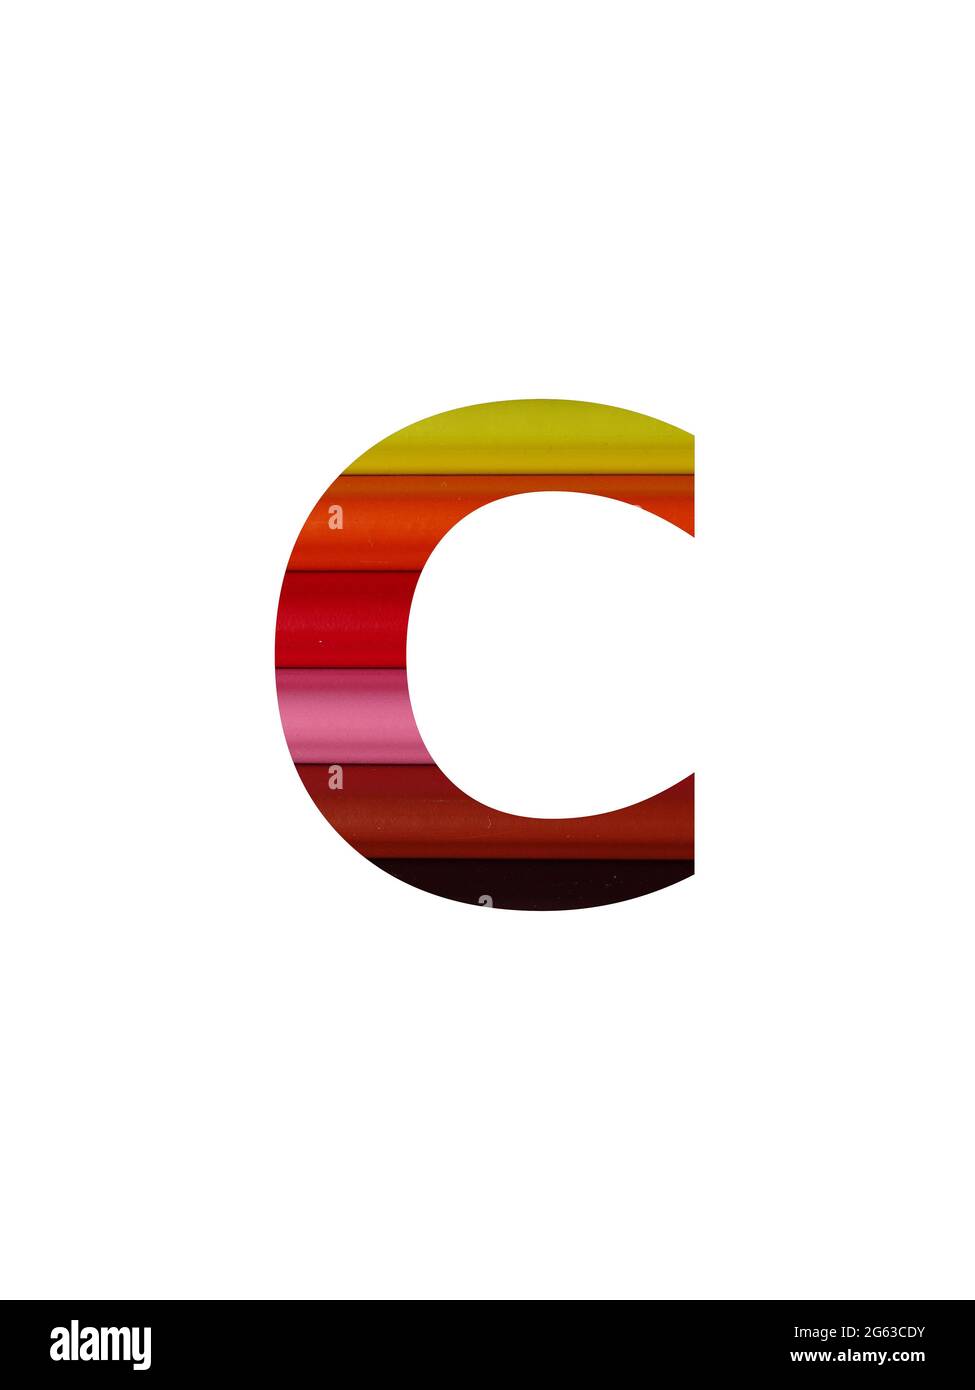 c squared logo